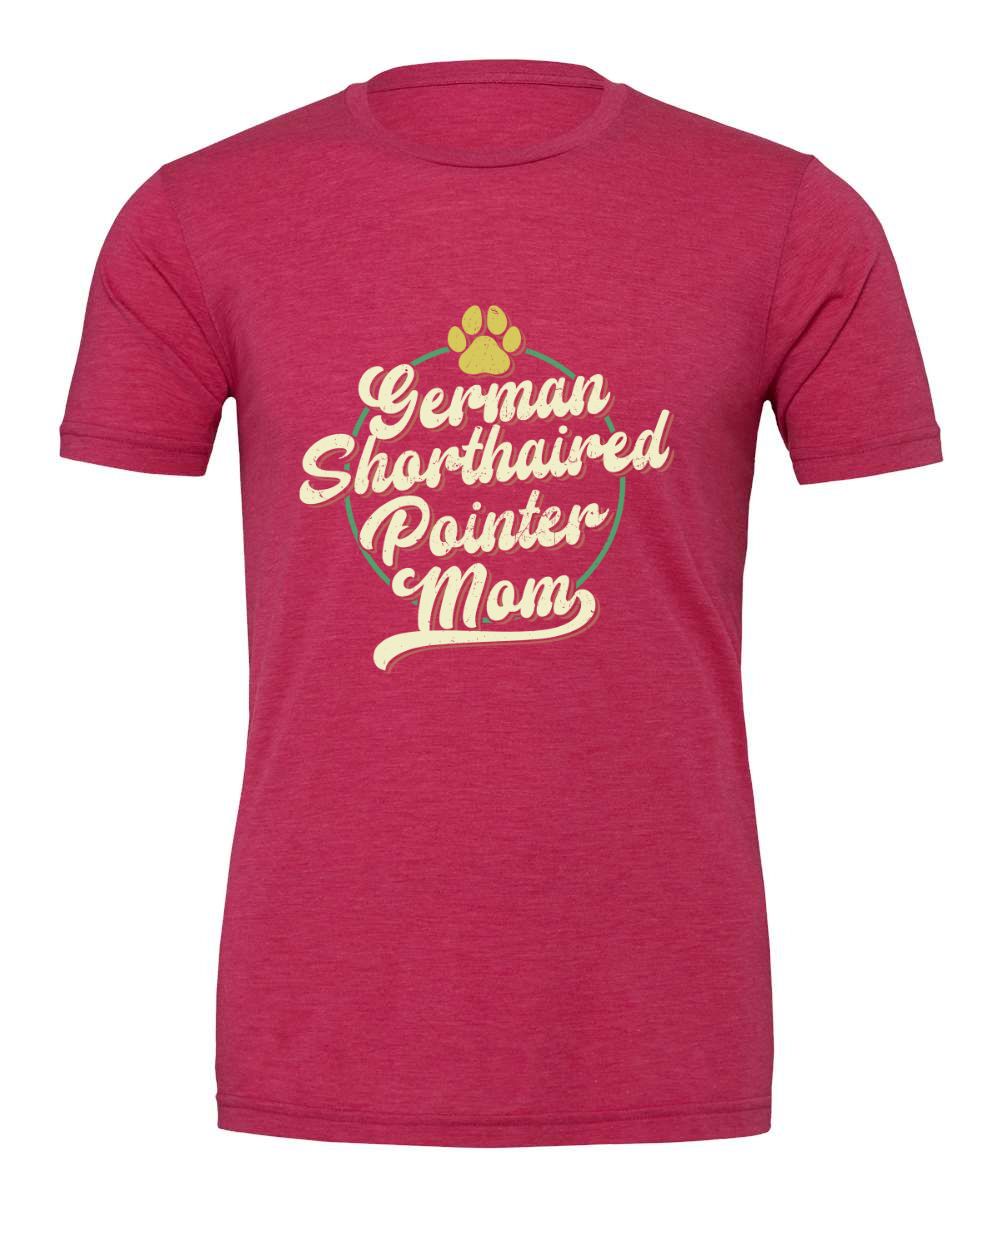 German Shorthaired Pointer Mom Round T-Shirt